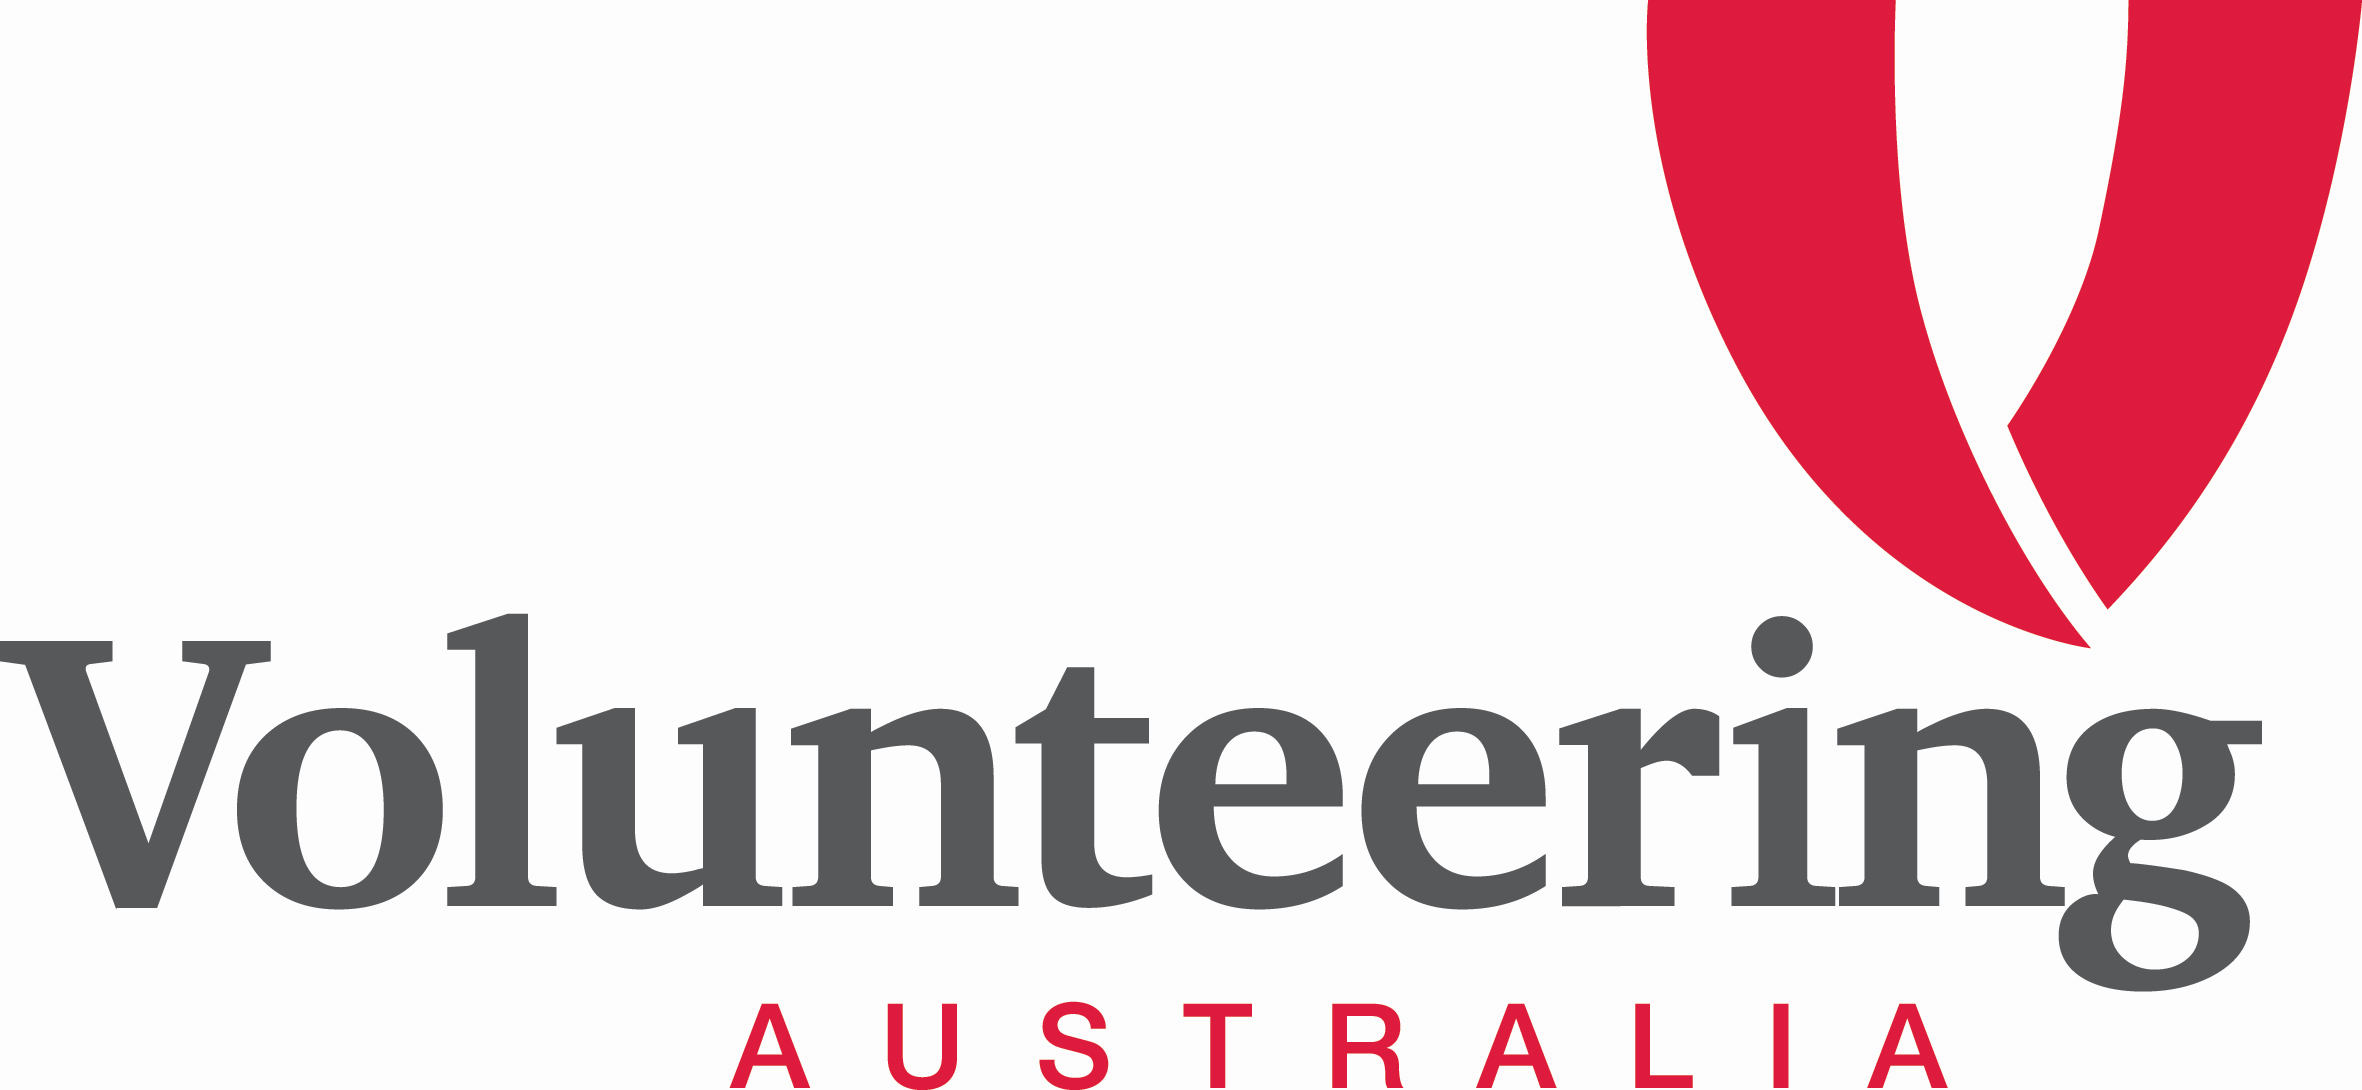 Volunteering Australia - Logo_hires.png